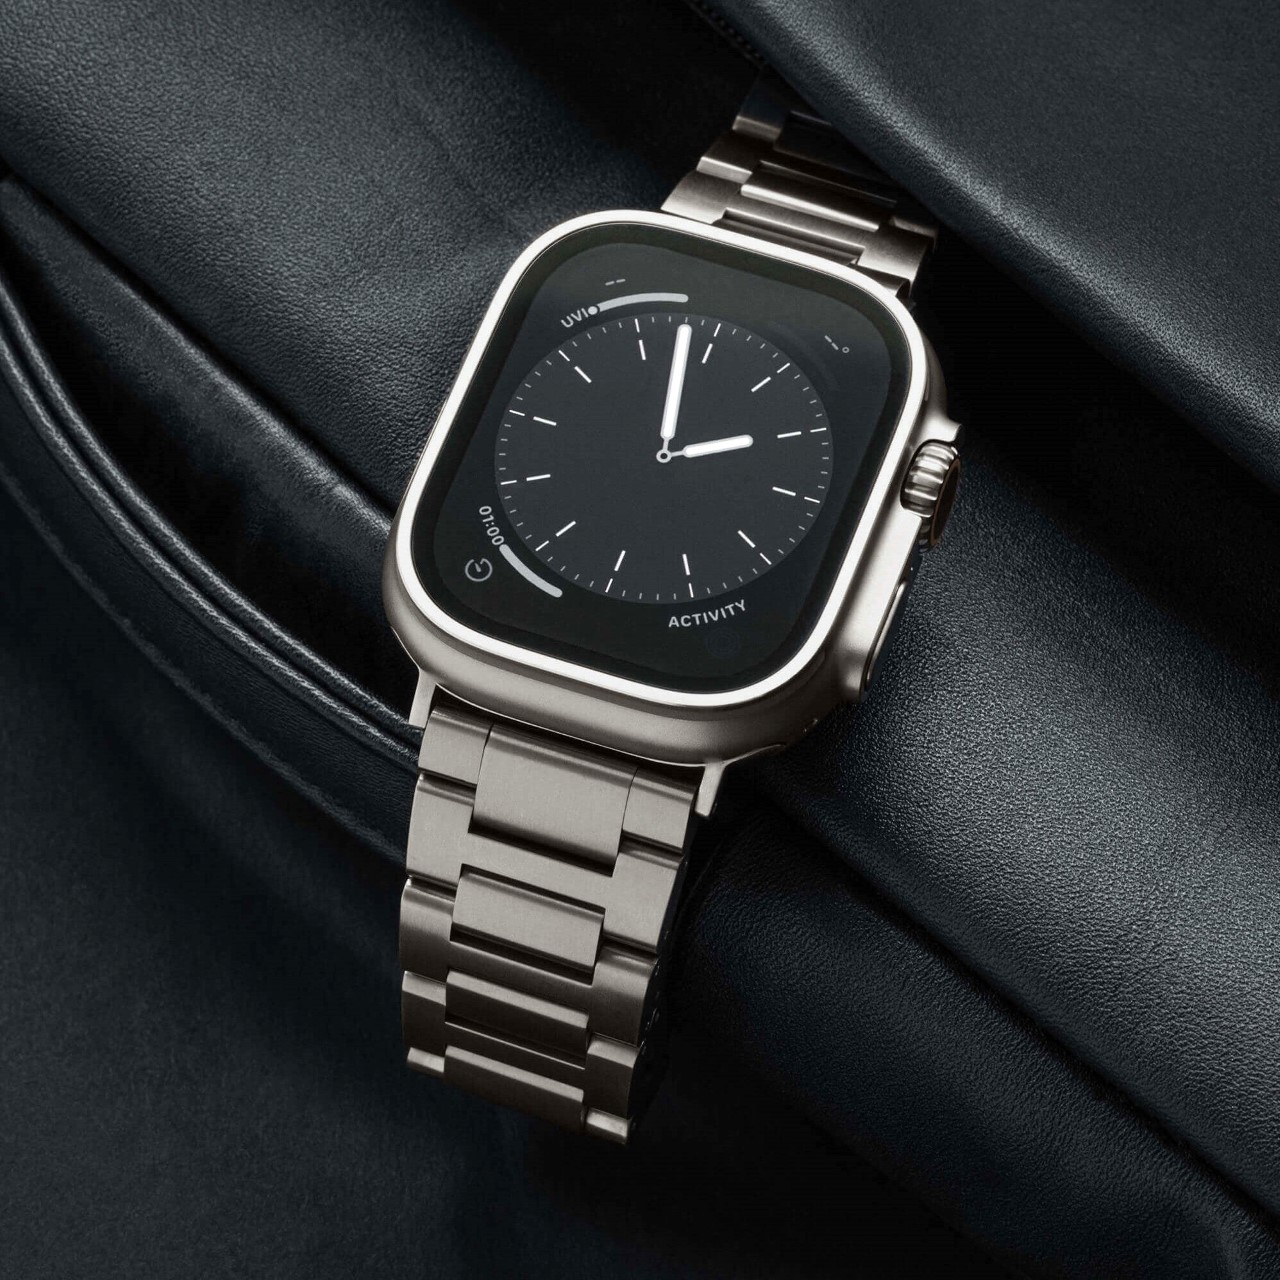 SANDMARC Leather Edition Apple Watch Band